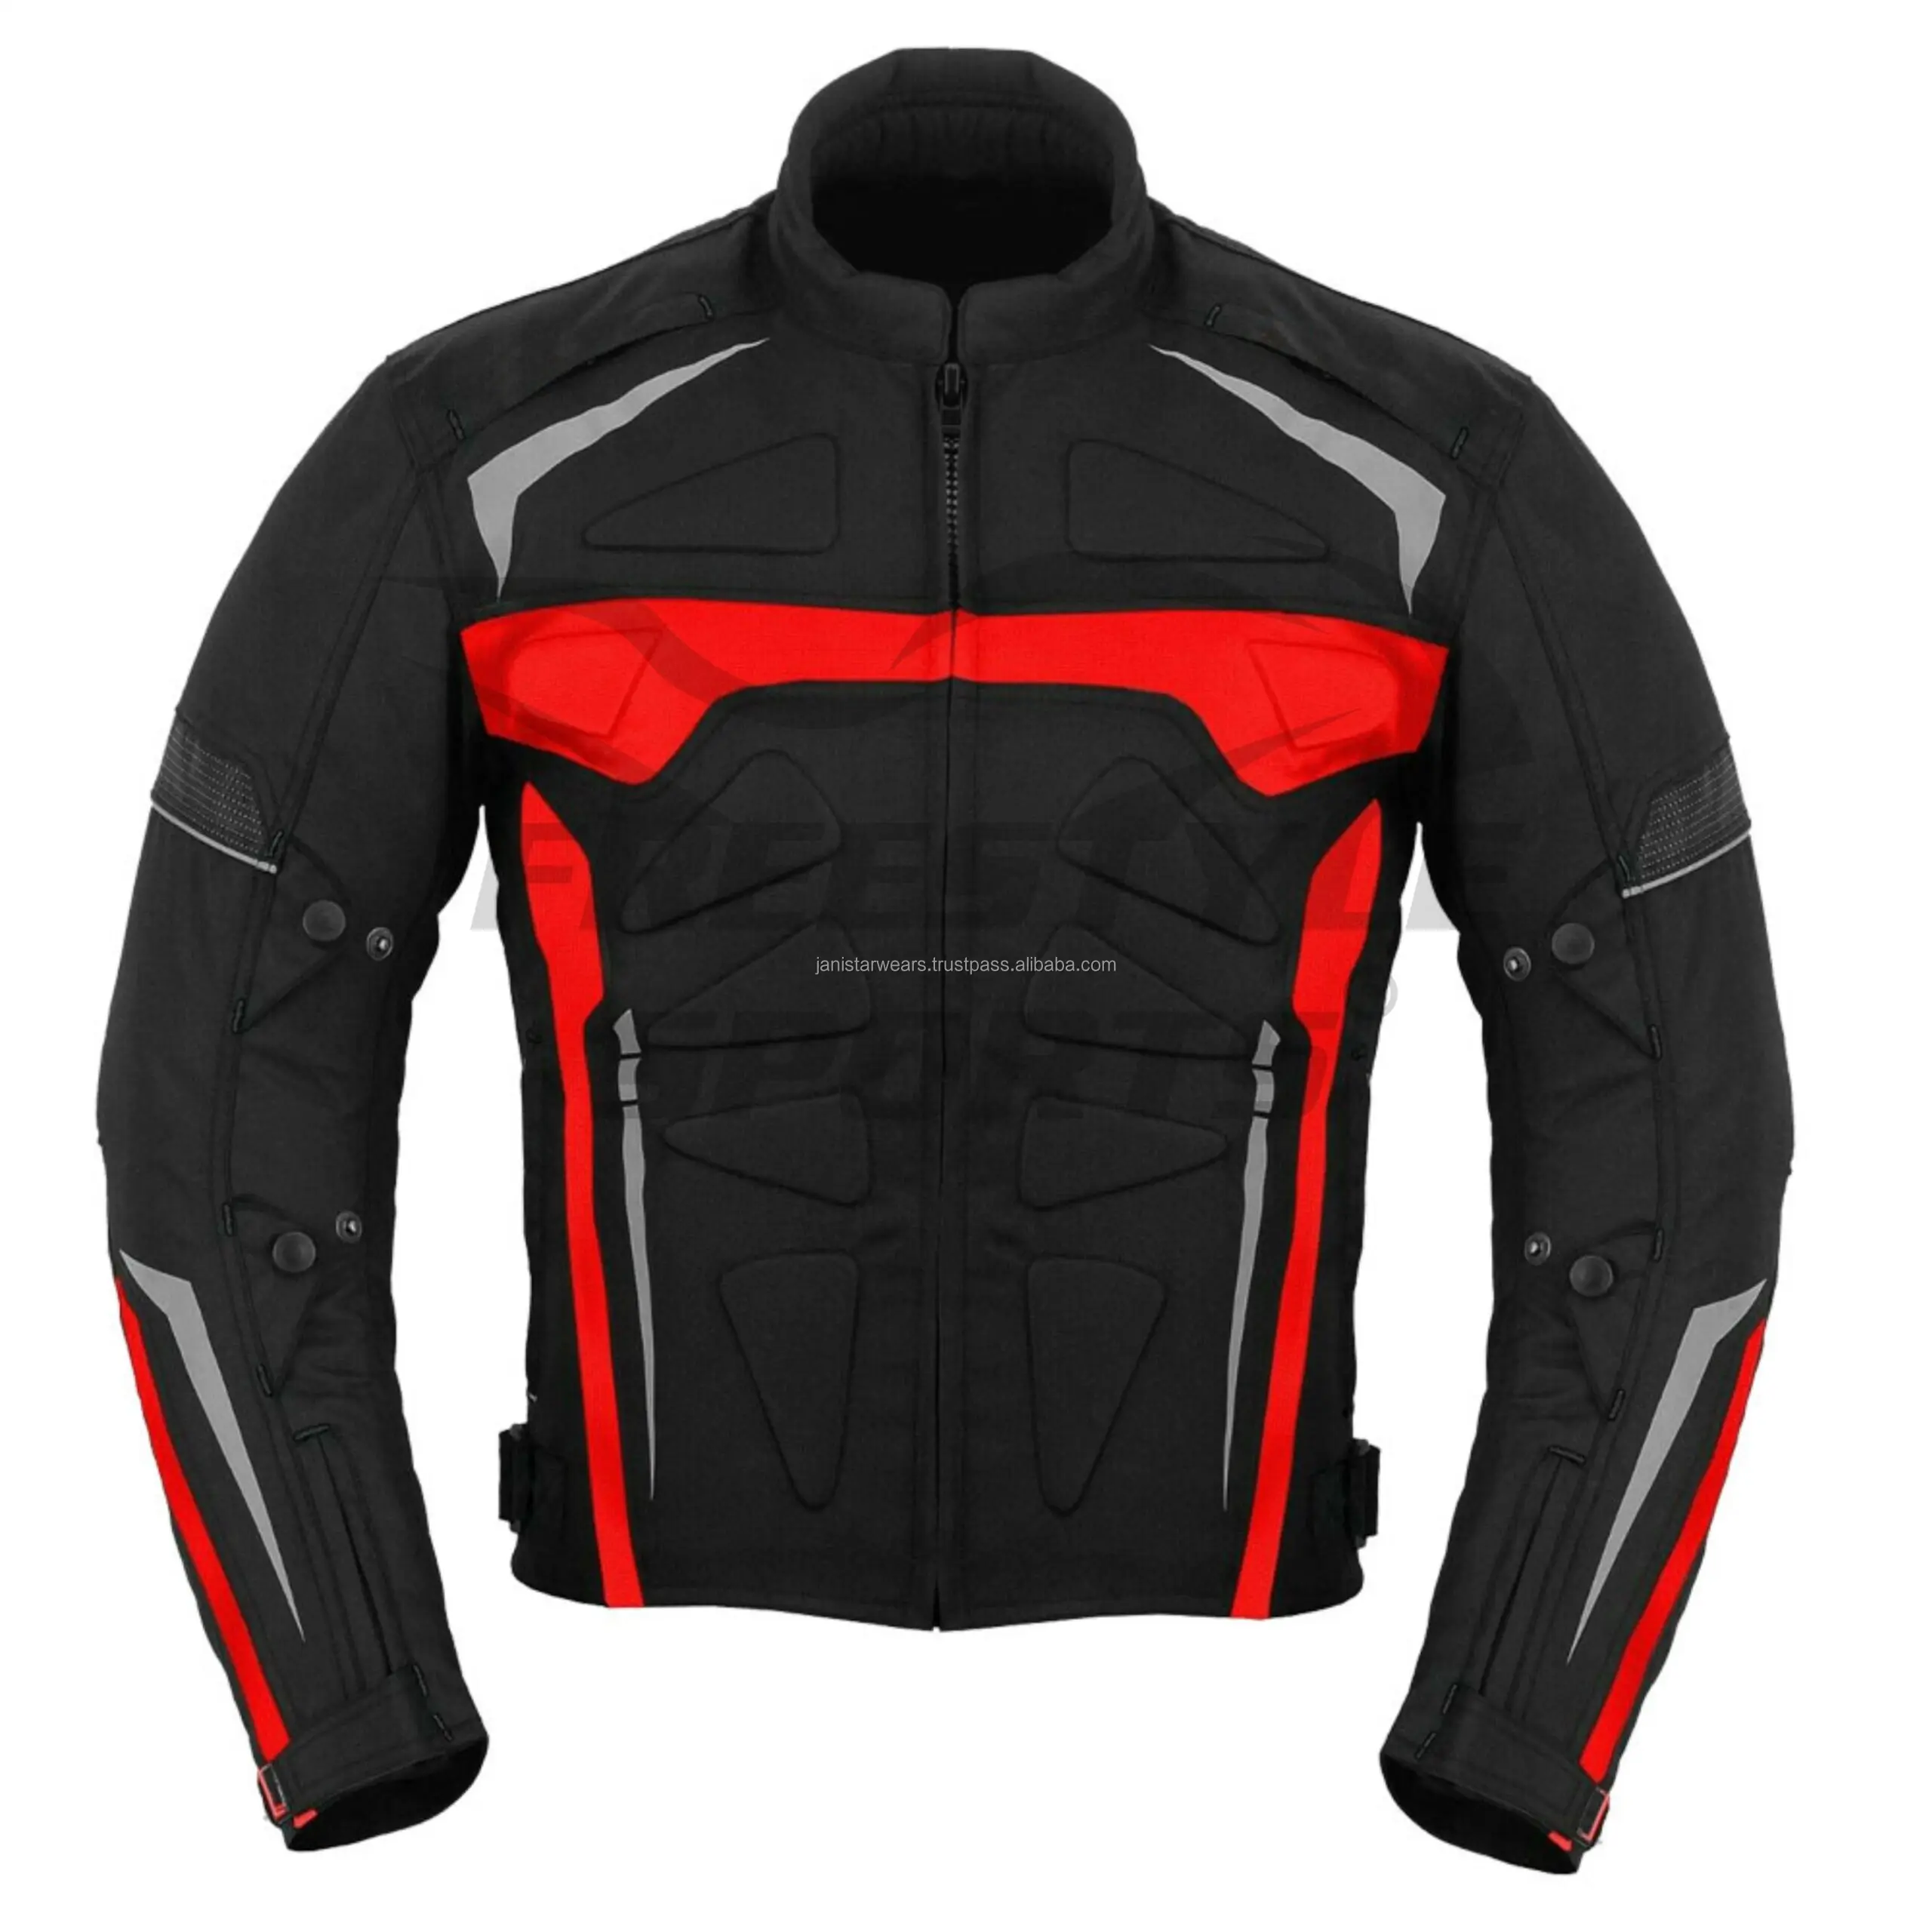 New Customized Motorcycle Textile Waterproof Jacket Urban Rider Motorbike racing windproof Jacket in Pakistan